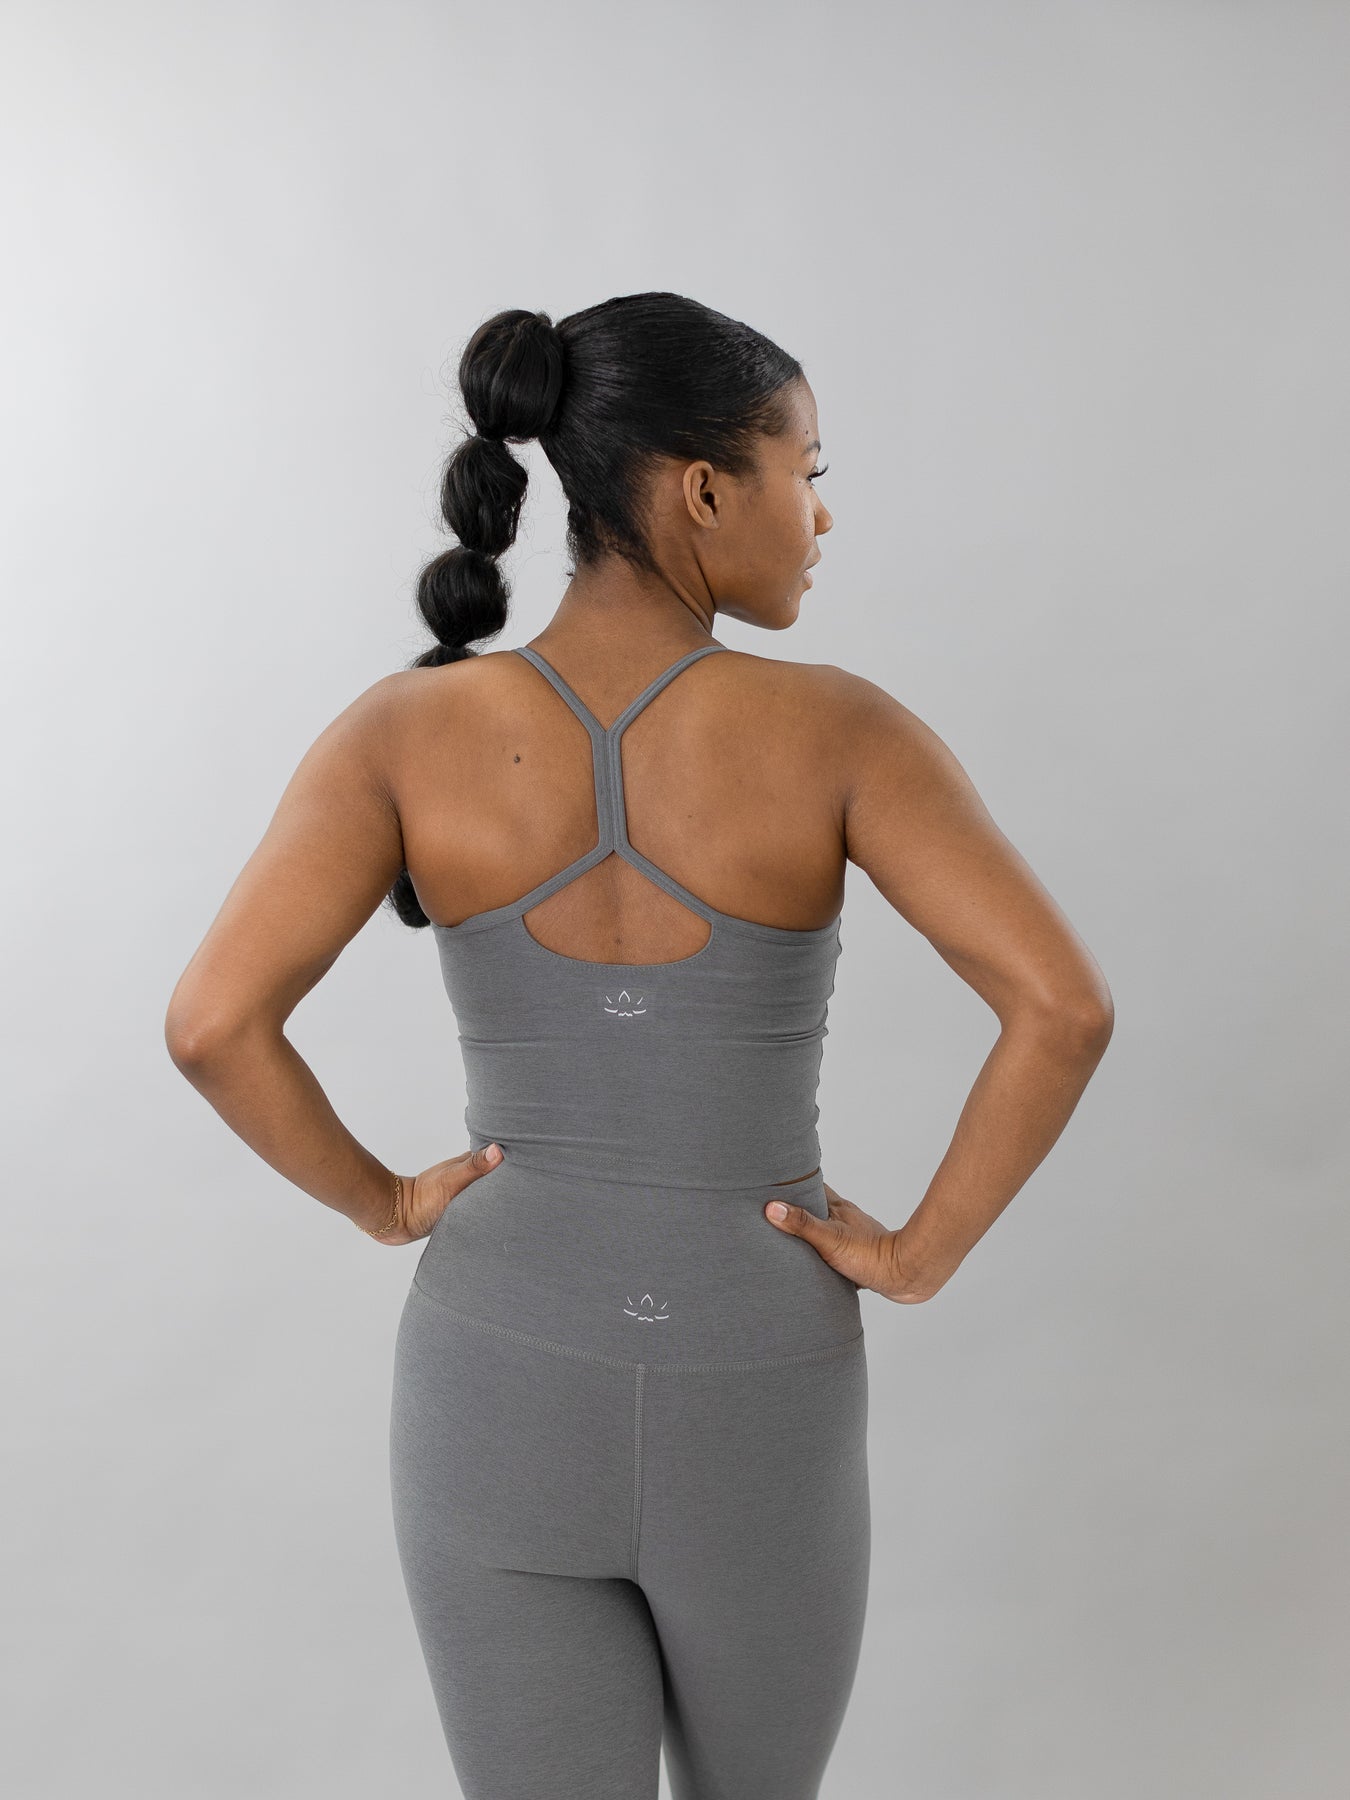 Beyond Yoga Powershine Slim Racerback Bra Size XL - $34 - From Claire